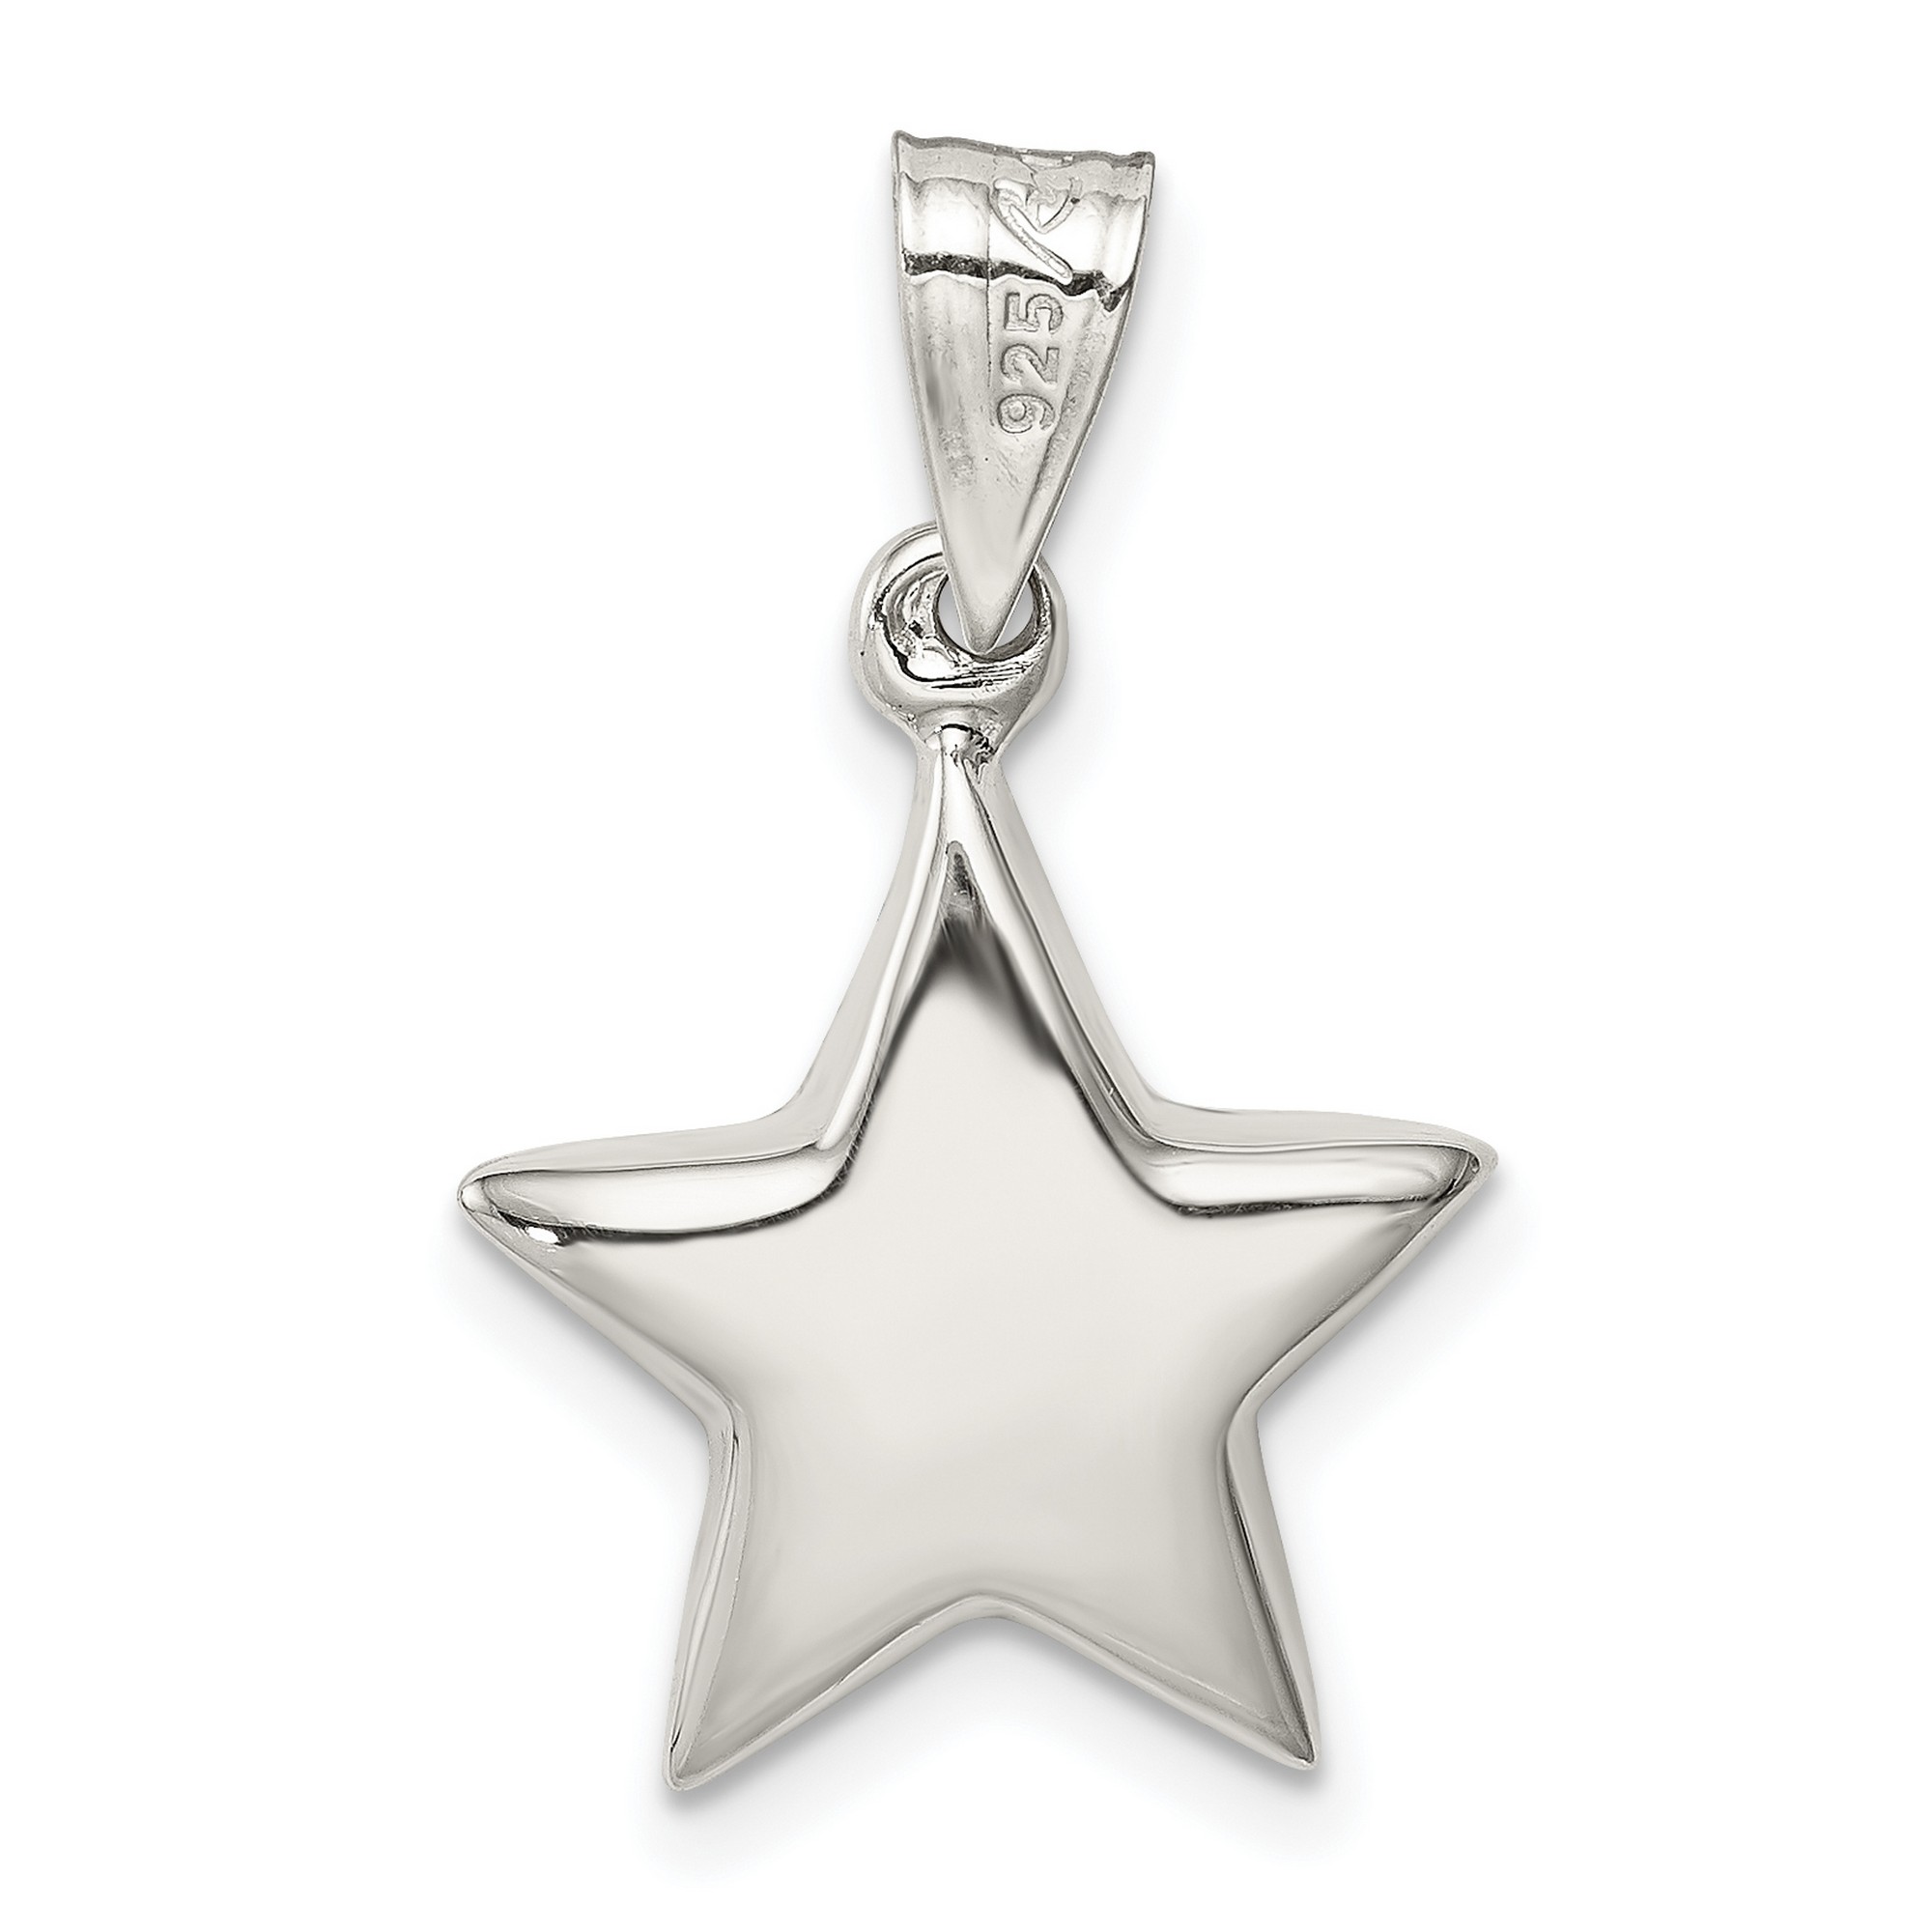 Star Pendant In Polished 925 Sterling Silver 23 mm x 16 mm 0.99gr | eBay